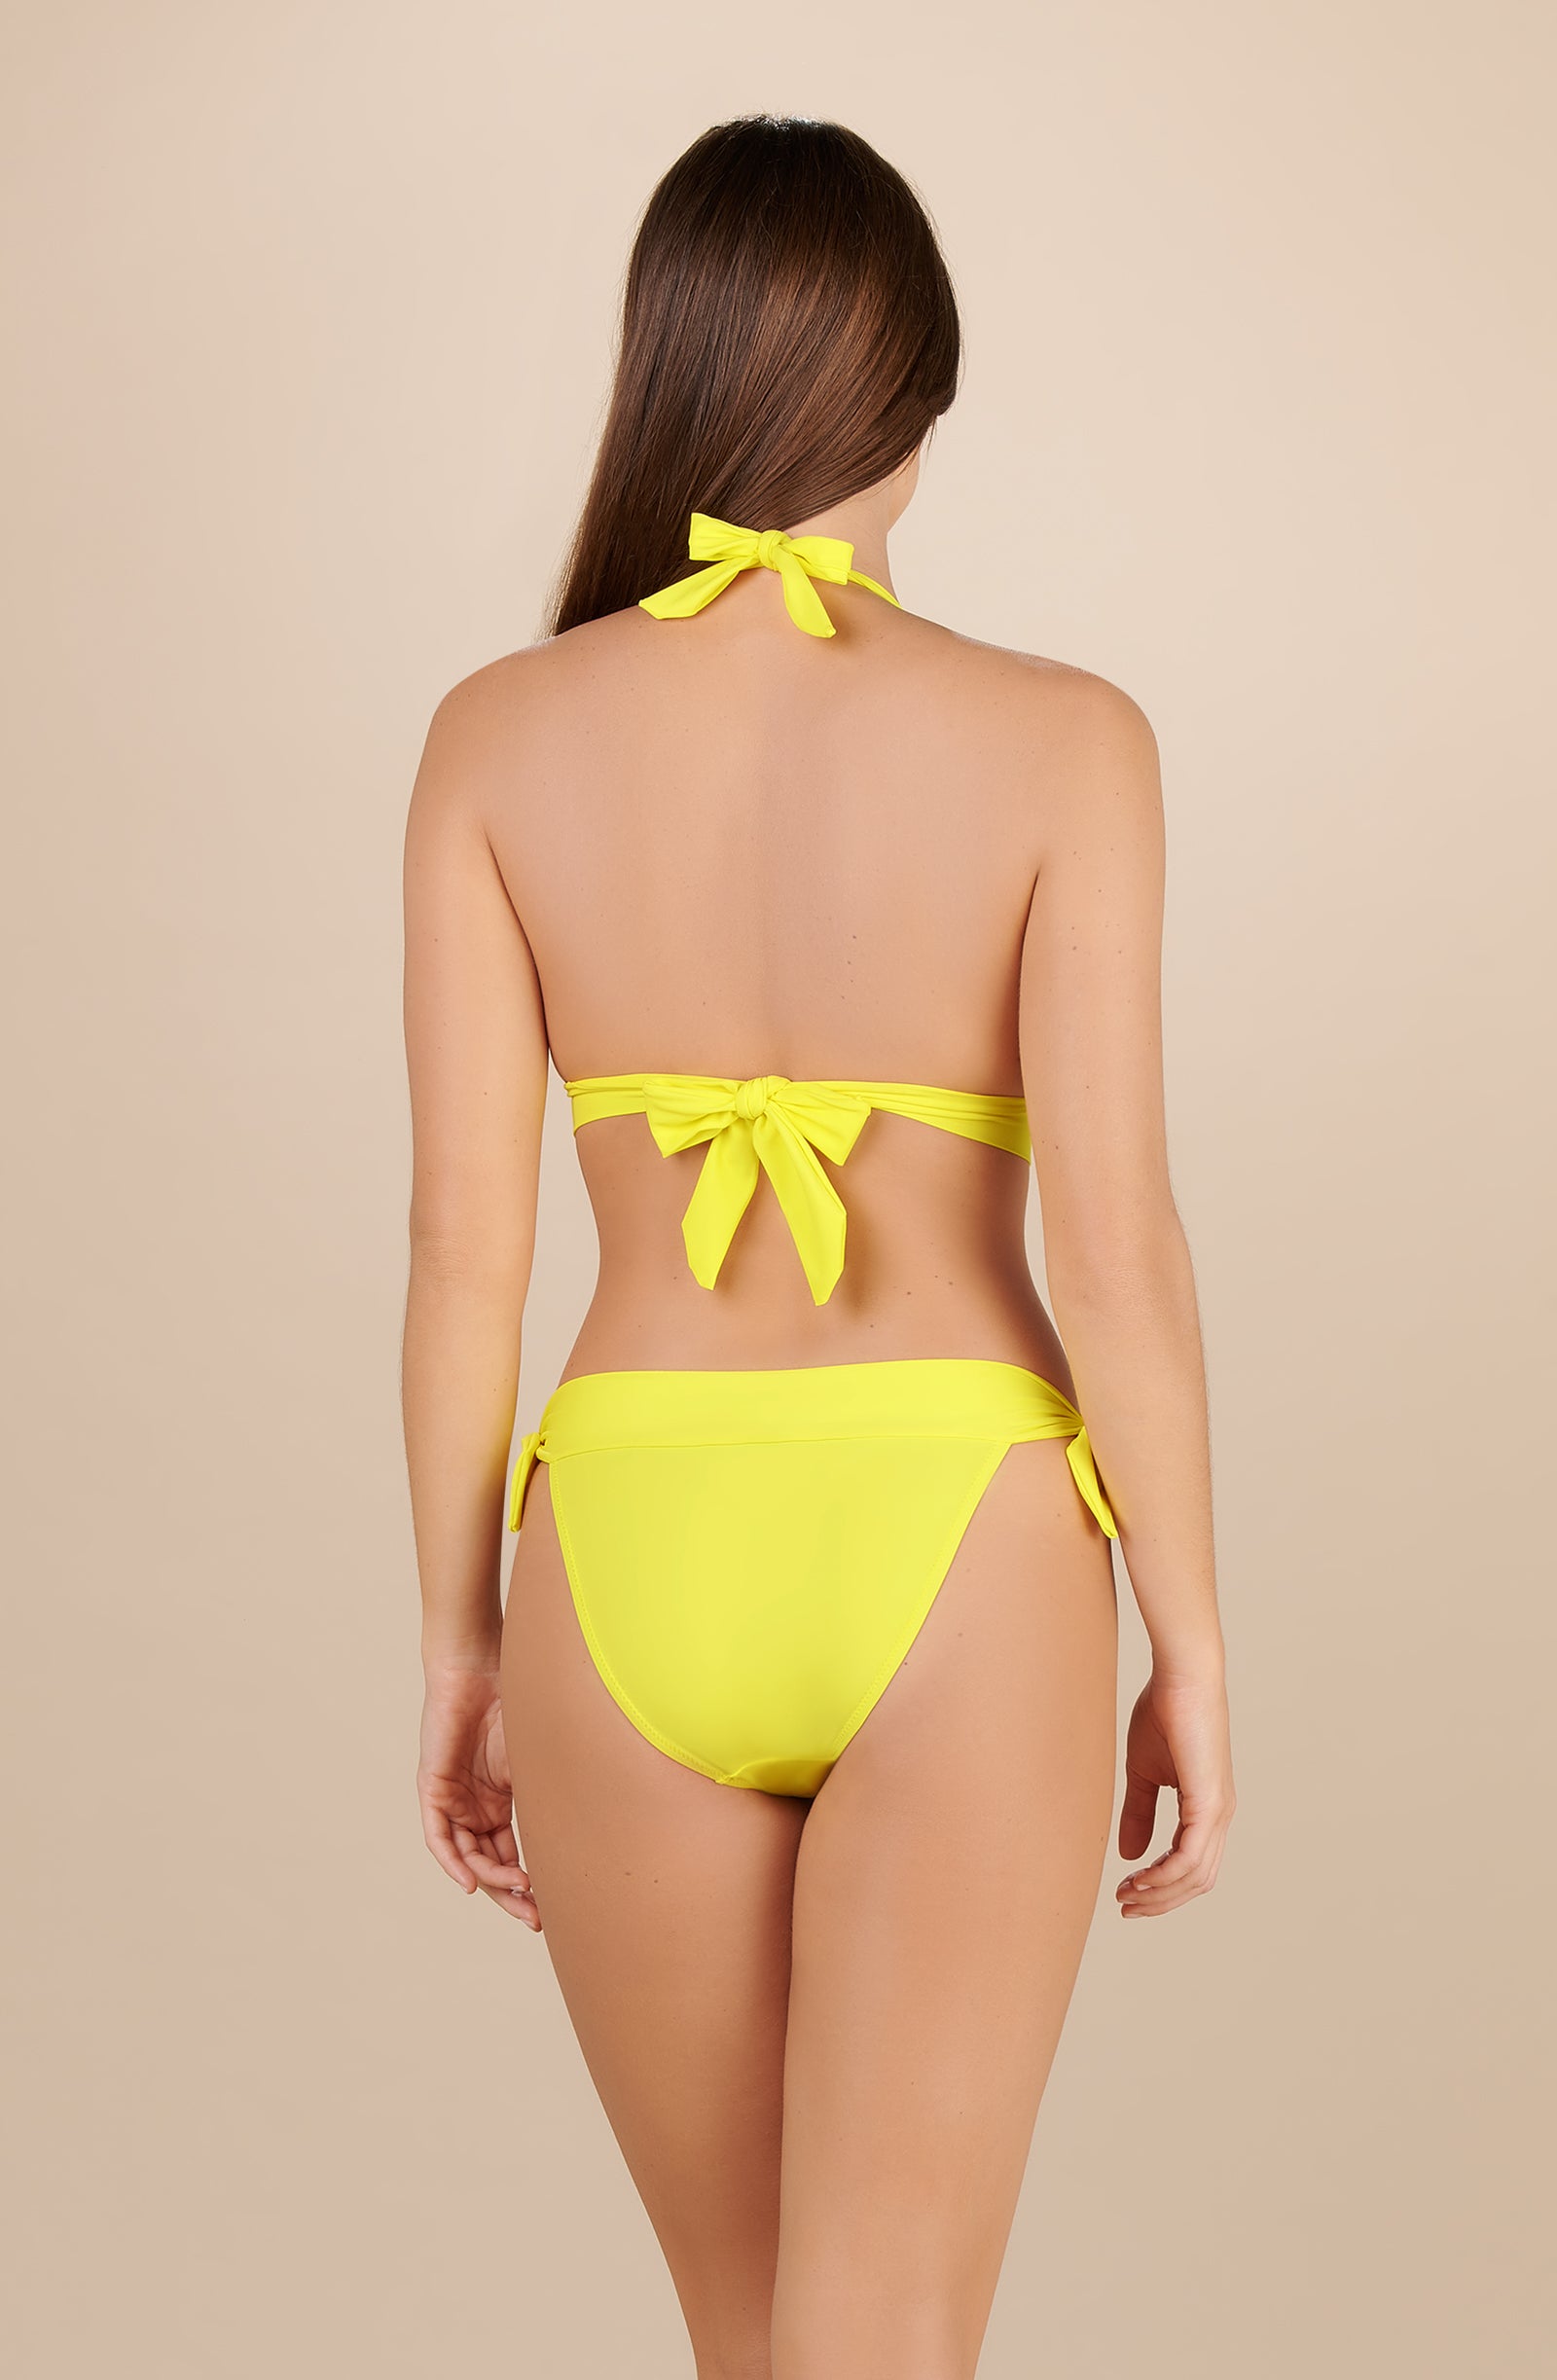 diva haut - Yellow push-up moulded cup bikini top